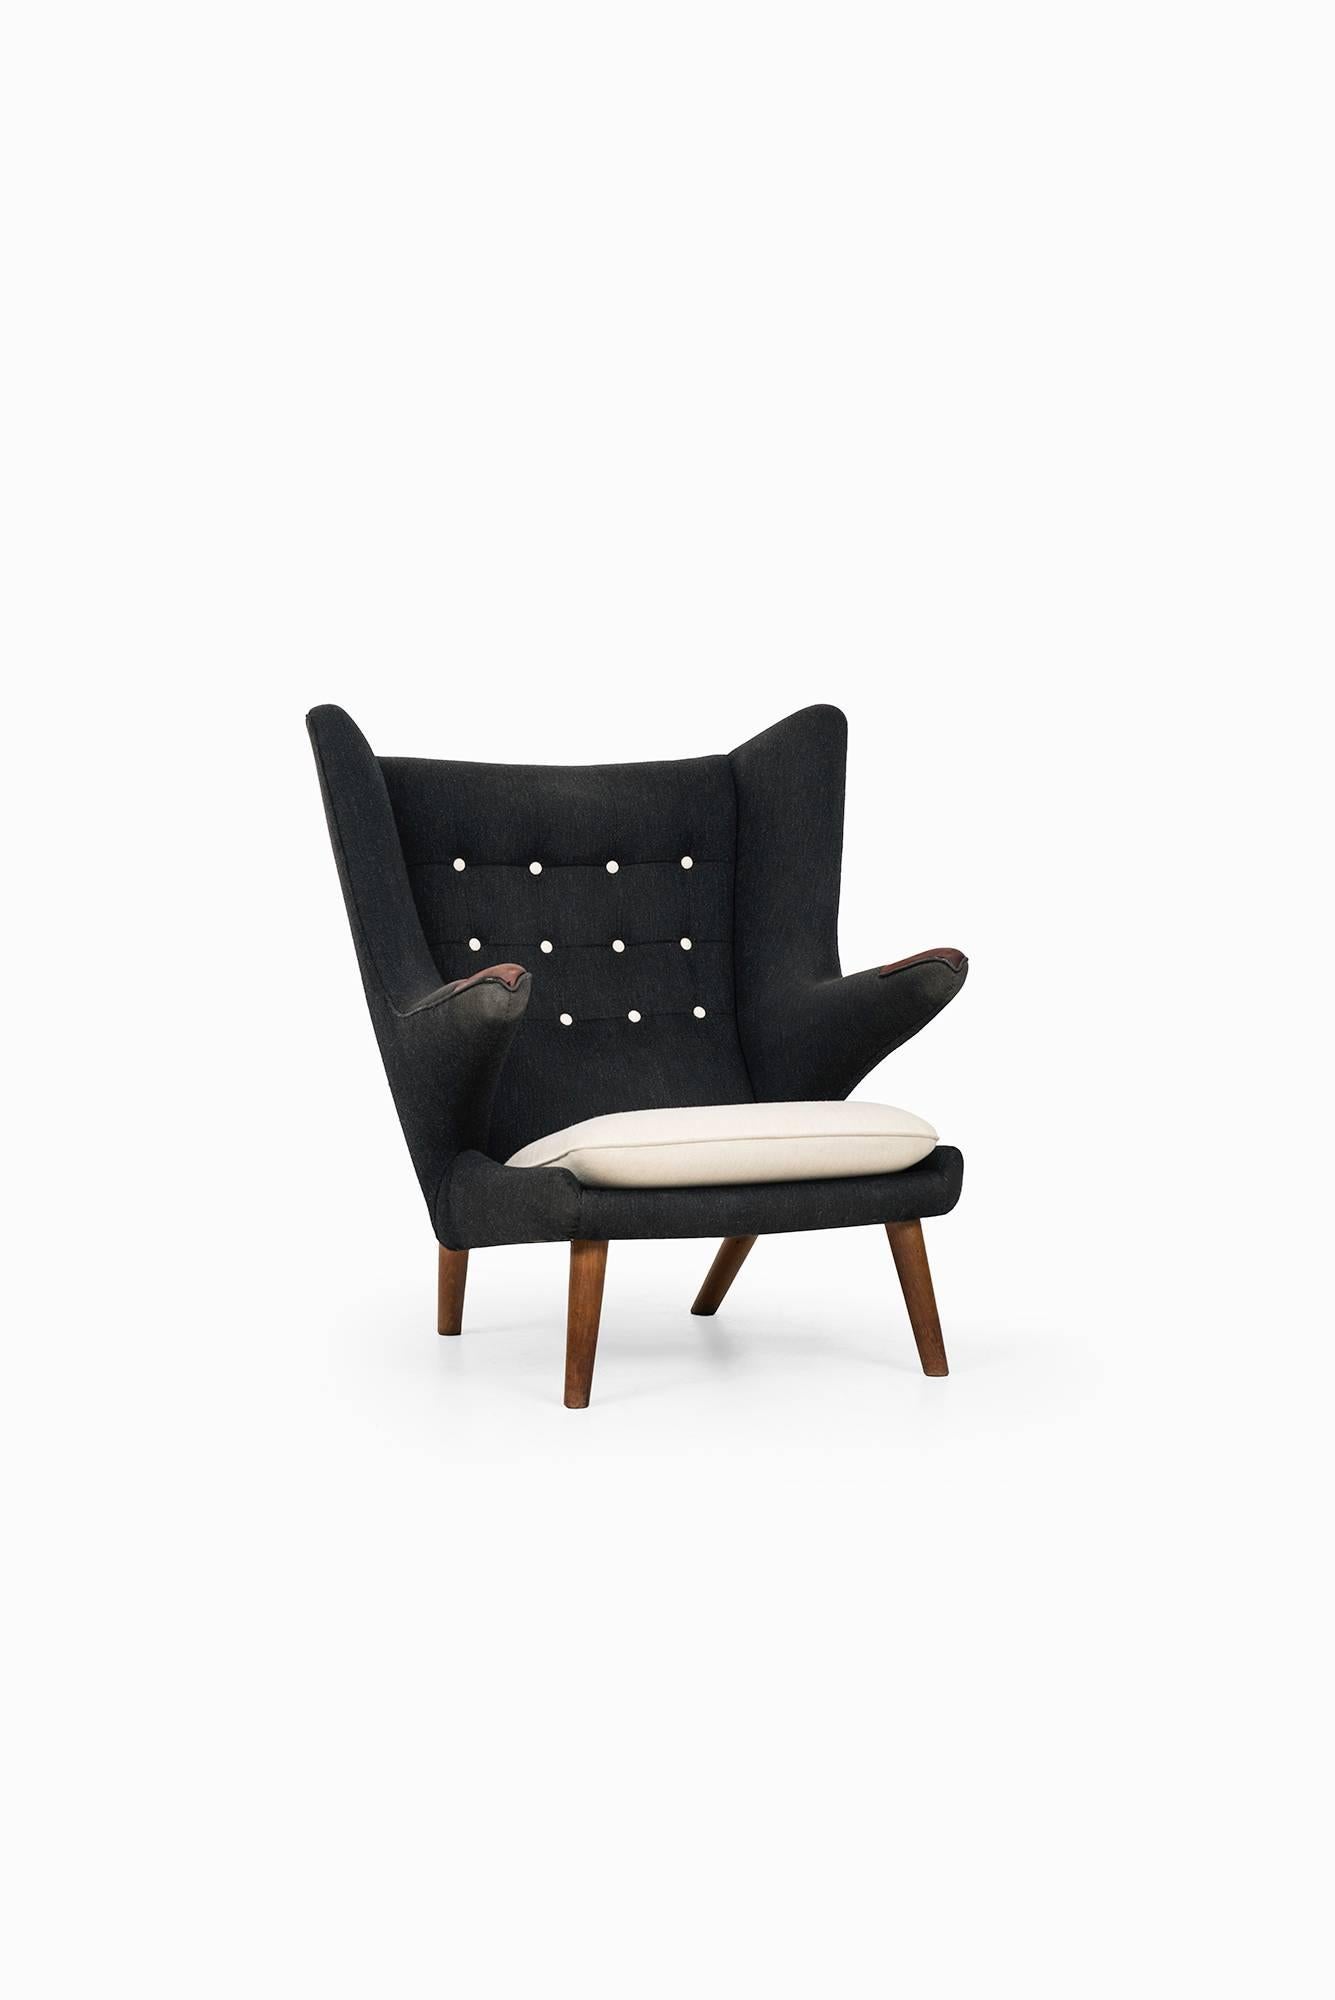 Rare easy chair model Papa bear designed by Hans Wegner. Produced by A.P. Stolen in Denmark.